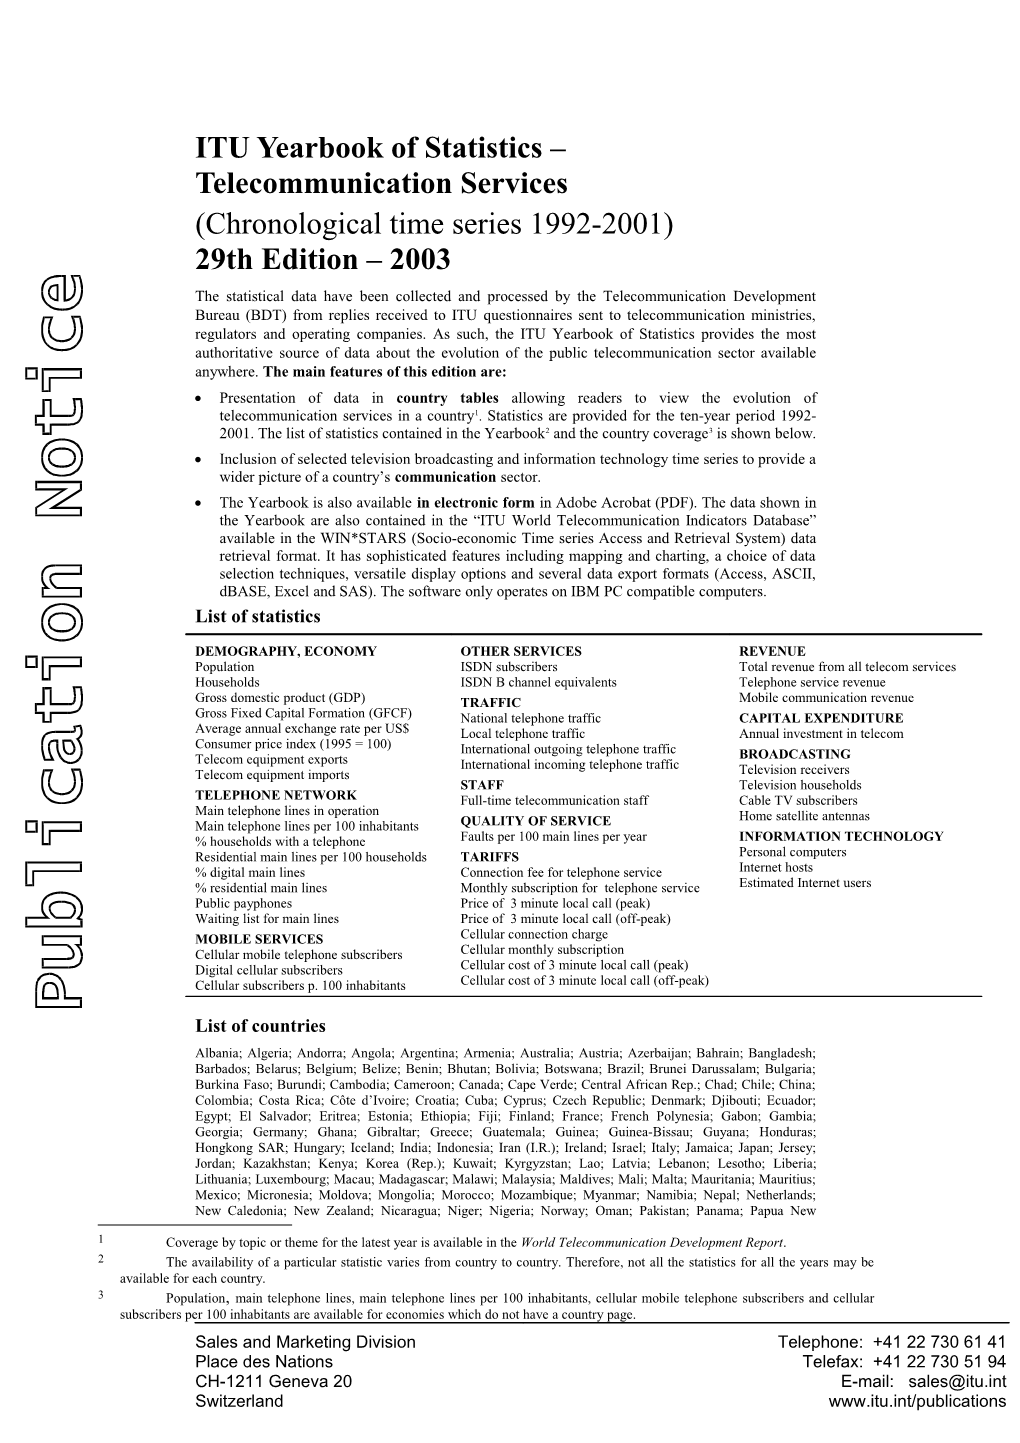 Avis De Publication No. 175-03 ITU Yearbook of Statistics Telecommunication Services